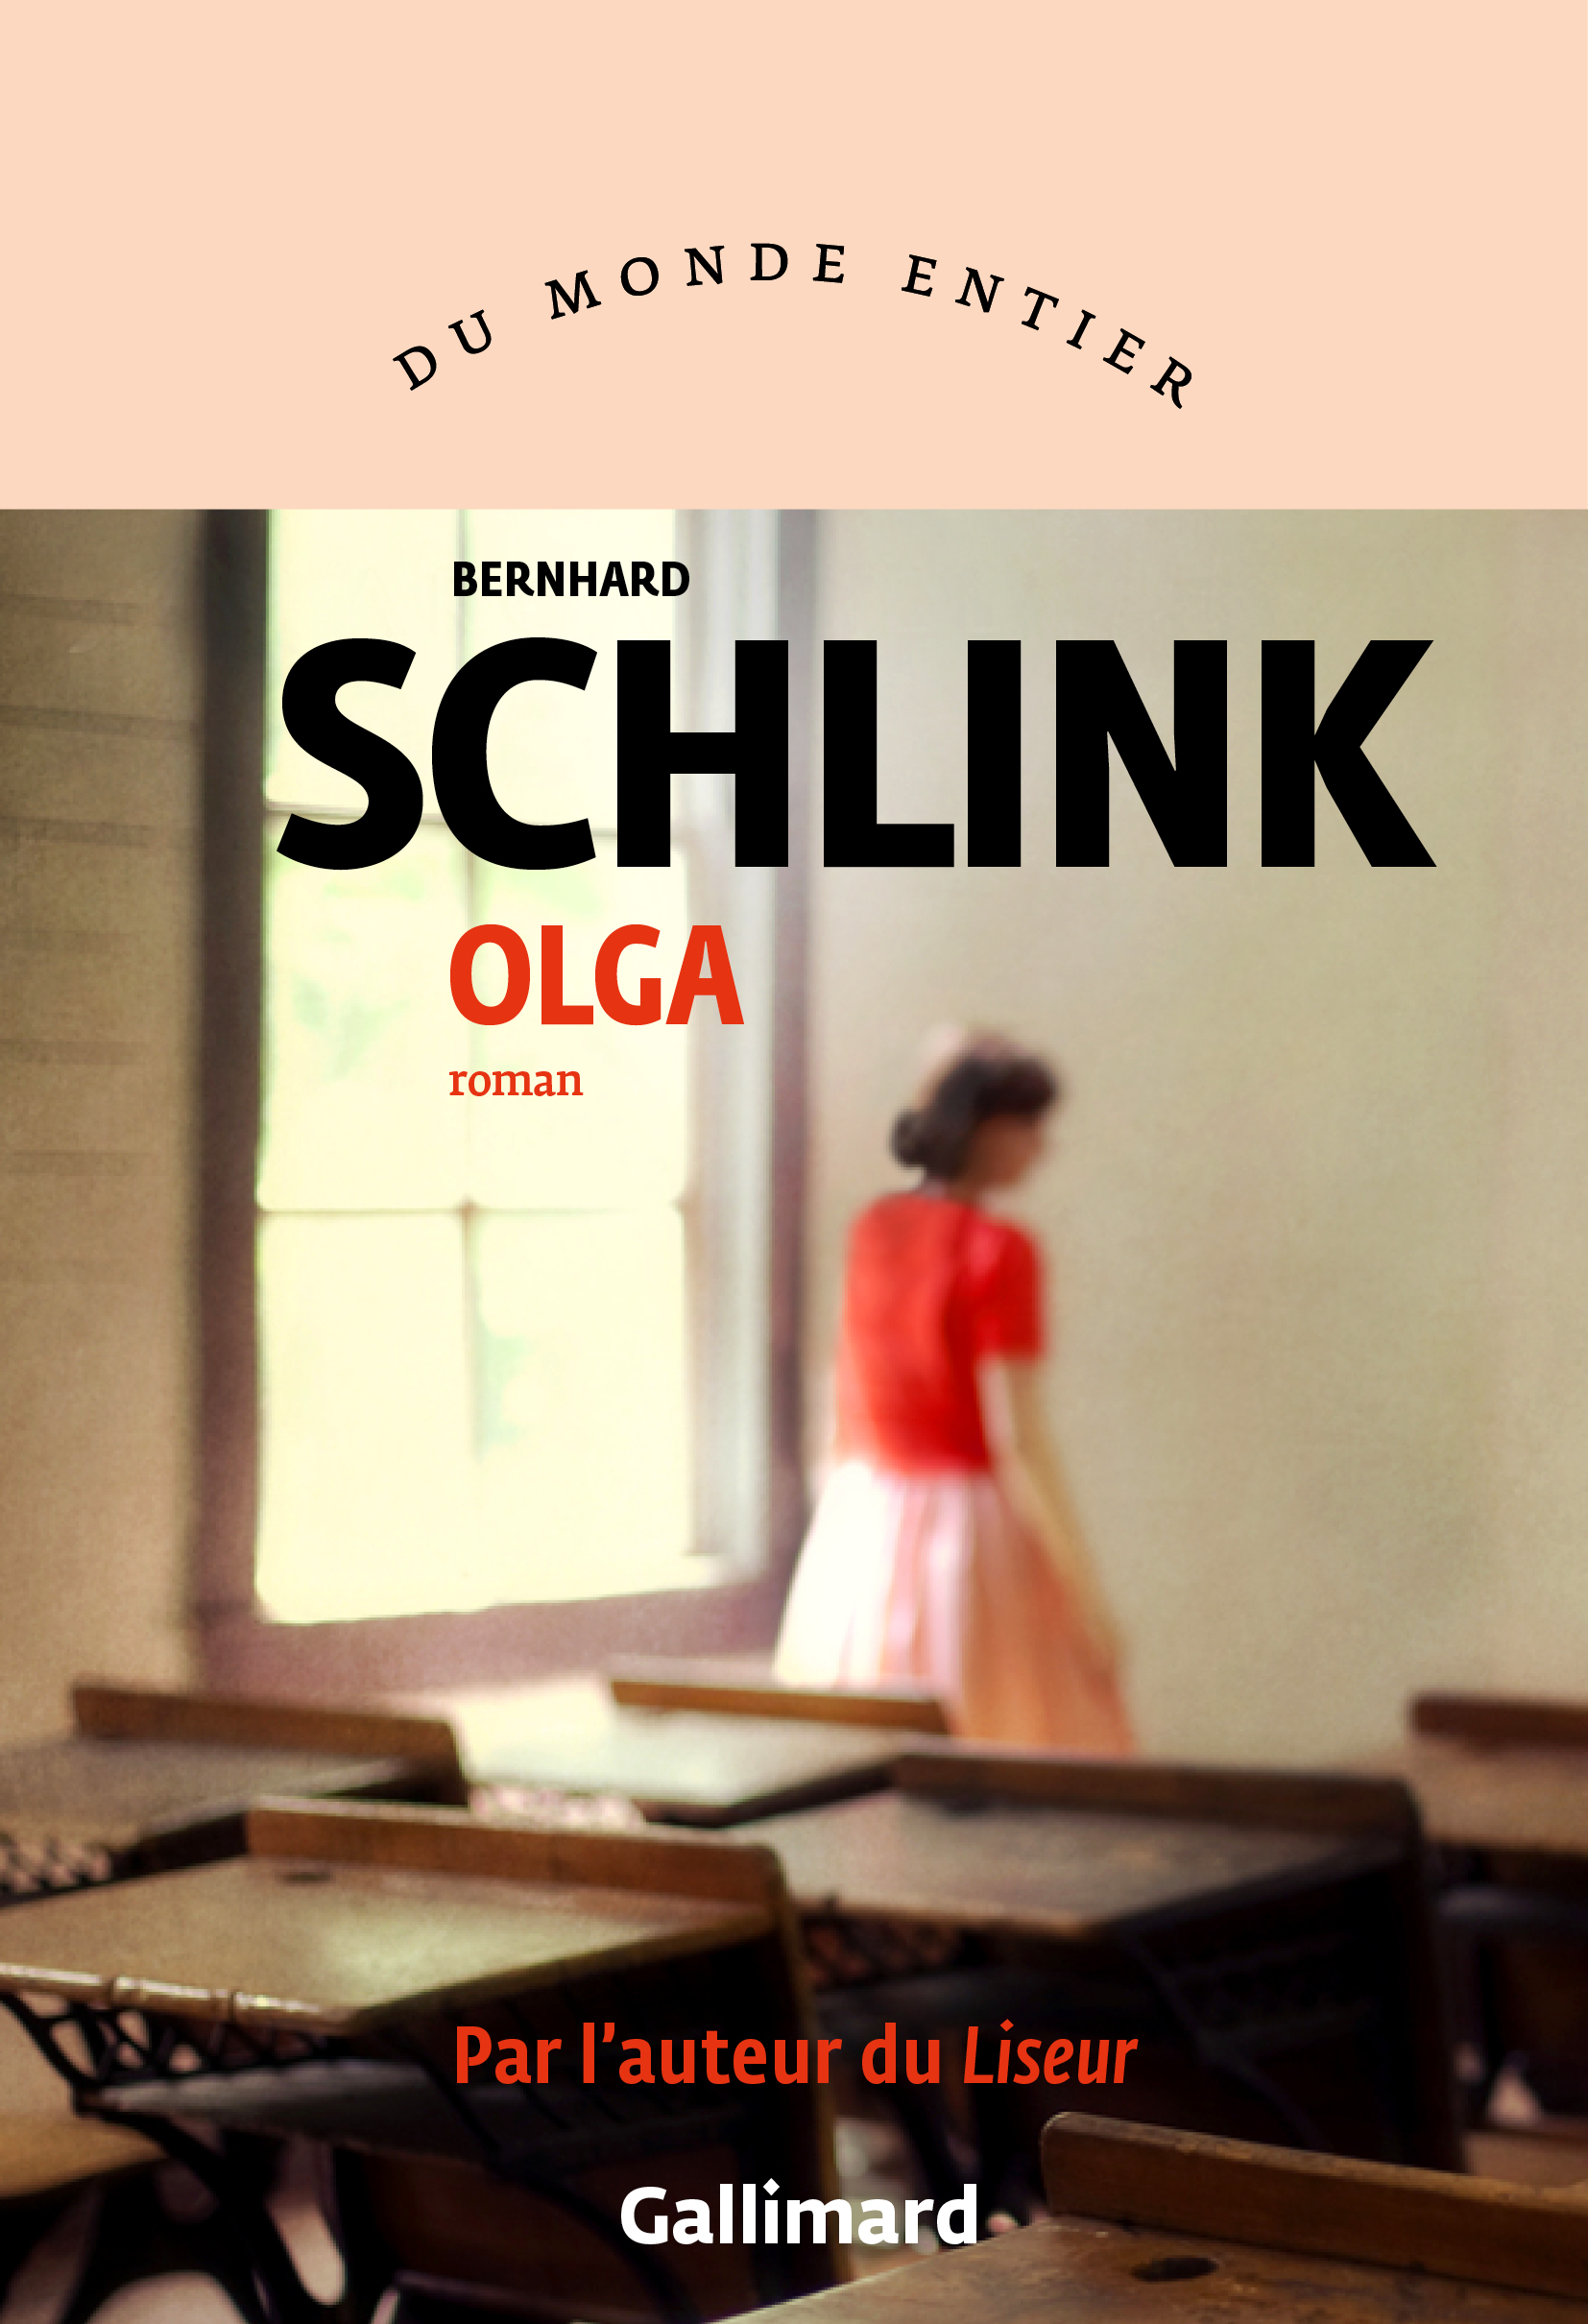 Now published in translation: Bernhard Schlink’s Olga in French